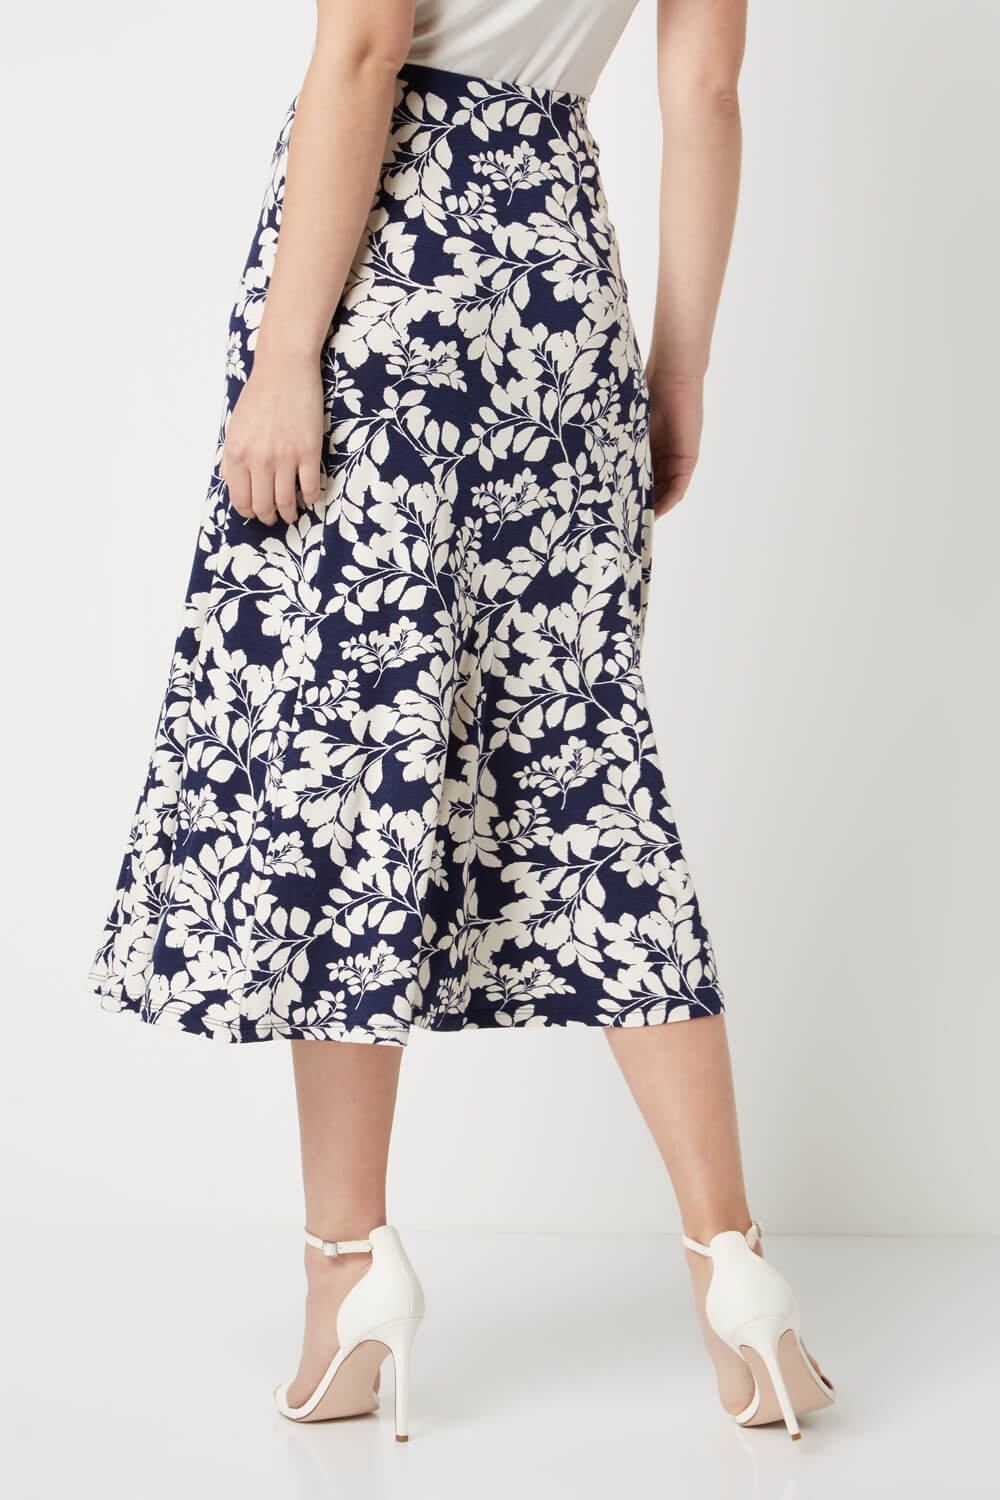 Floral Print Panel Midi Skirt in Navy - Roman Originals UK